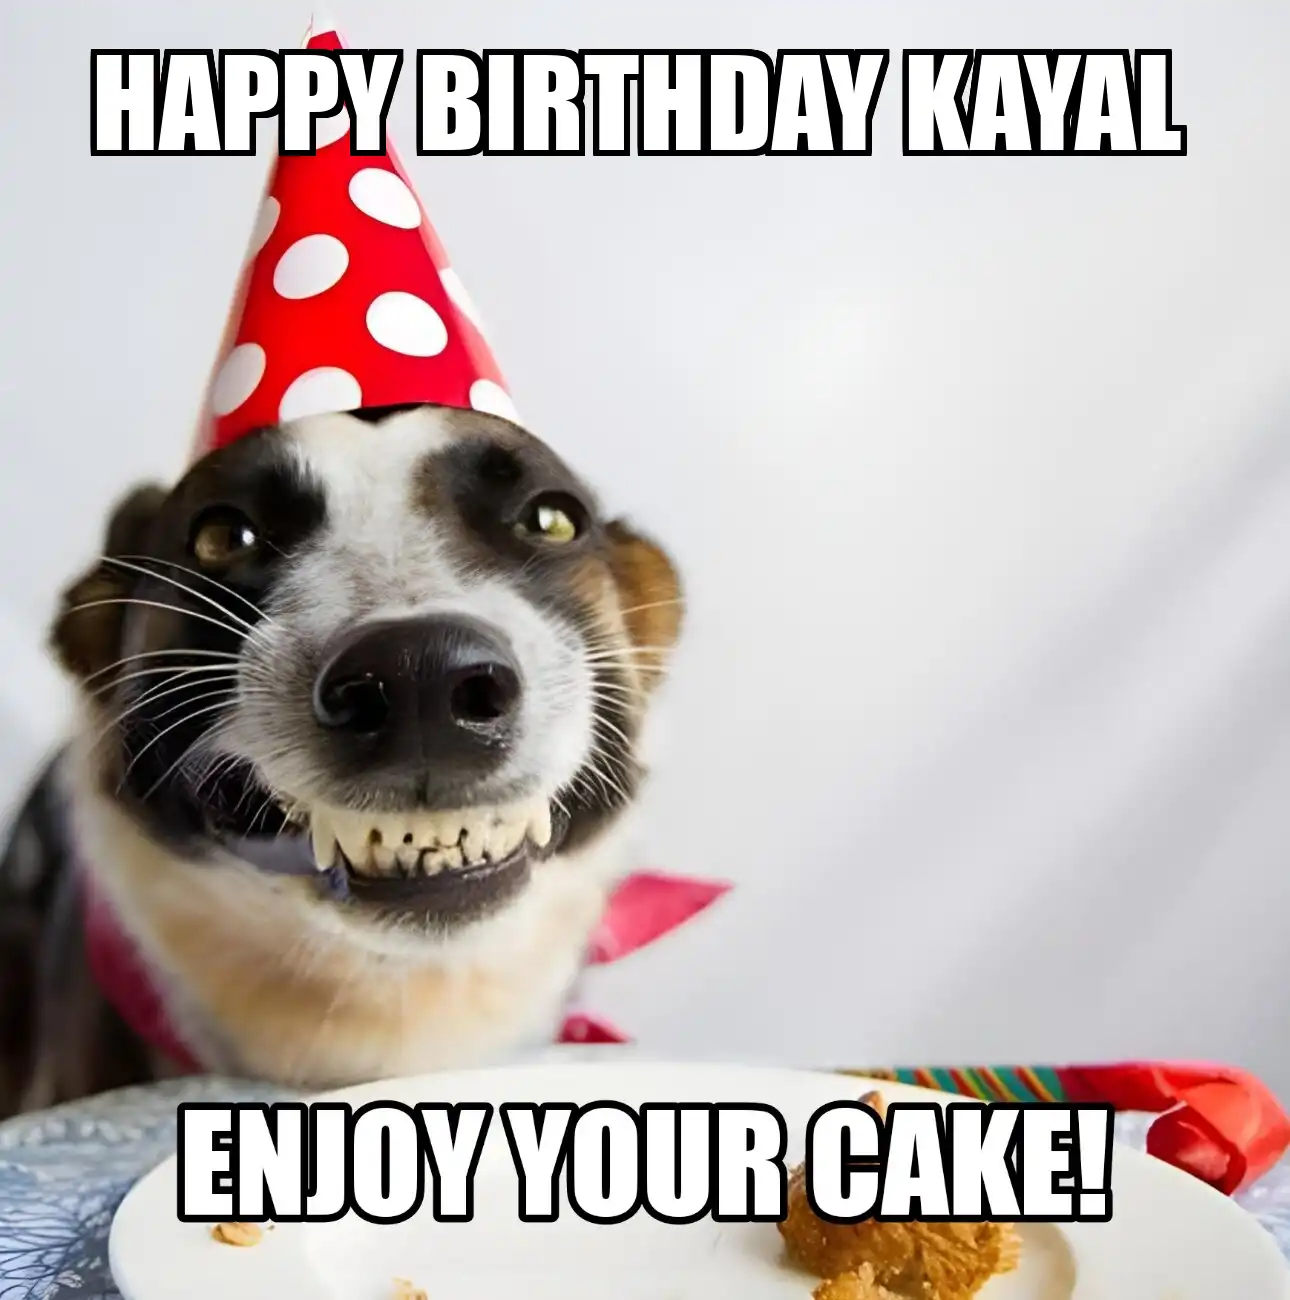 Happy Birthday Kayal Enjoy Your Cake Dog Meme